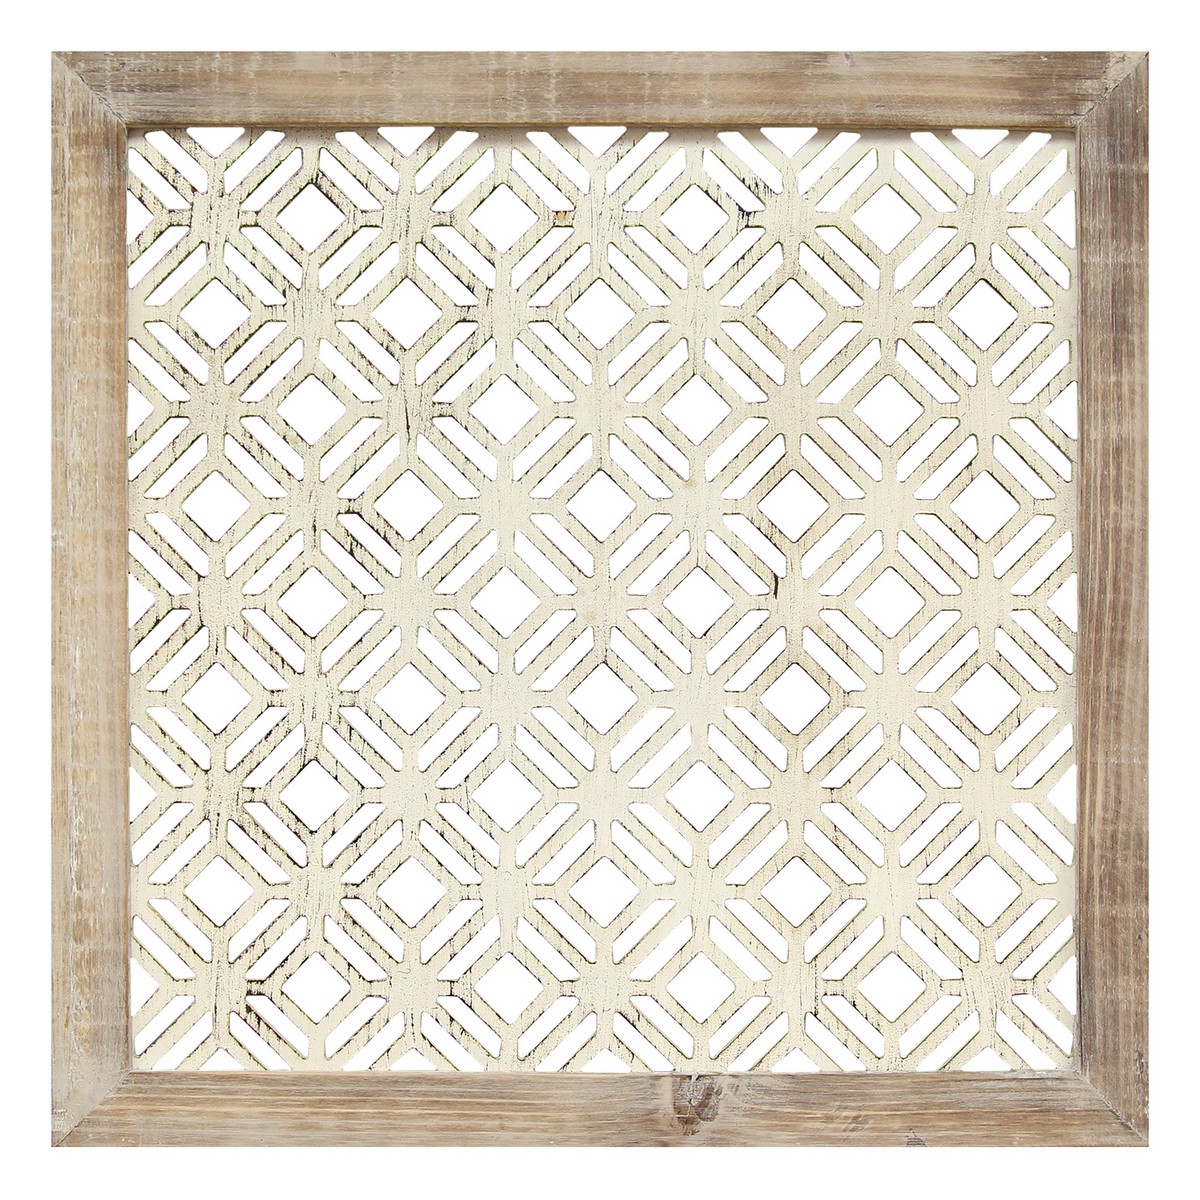 Stratton Home Decor Framed Laser-Cut Wall Decor (1pc) - Distressed White